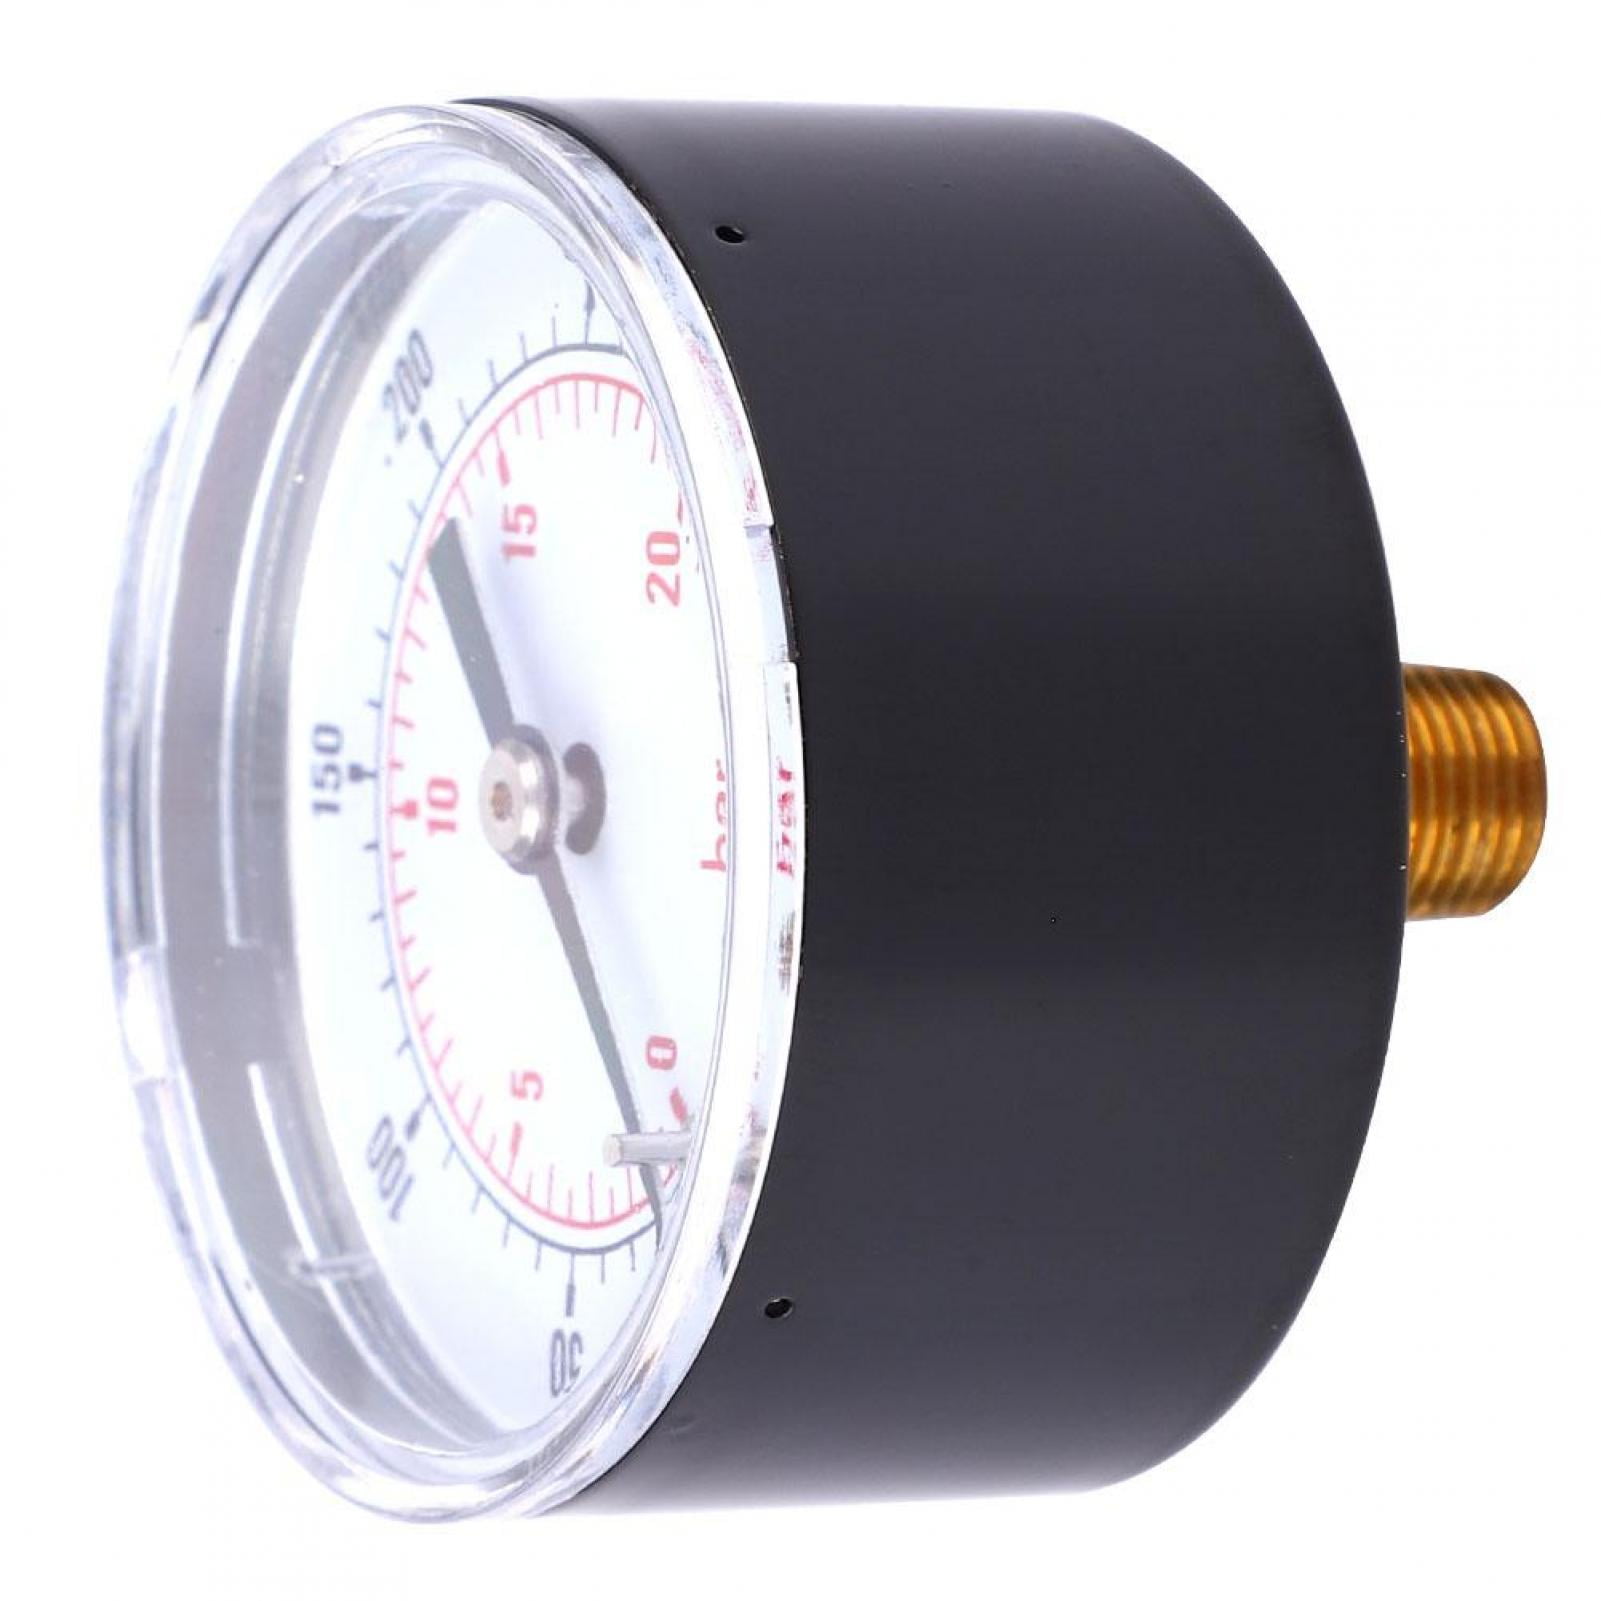 0-100psi 0-7bar 50mm Dial 1/8 BSPT Axial Pressure Gauge Air Pressure Gauge Back Connection for Air,Water,Oil,Gas Pressure Gauge